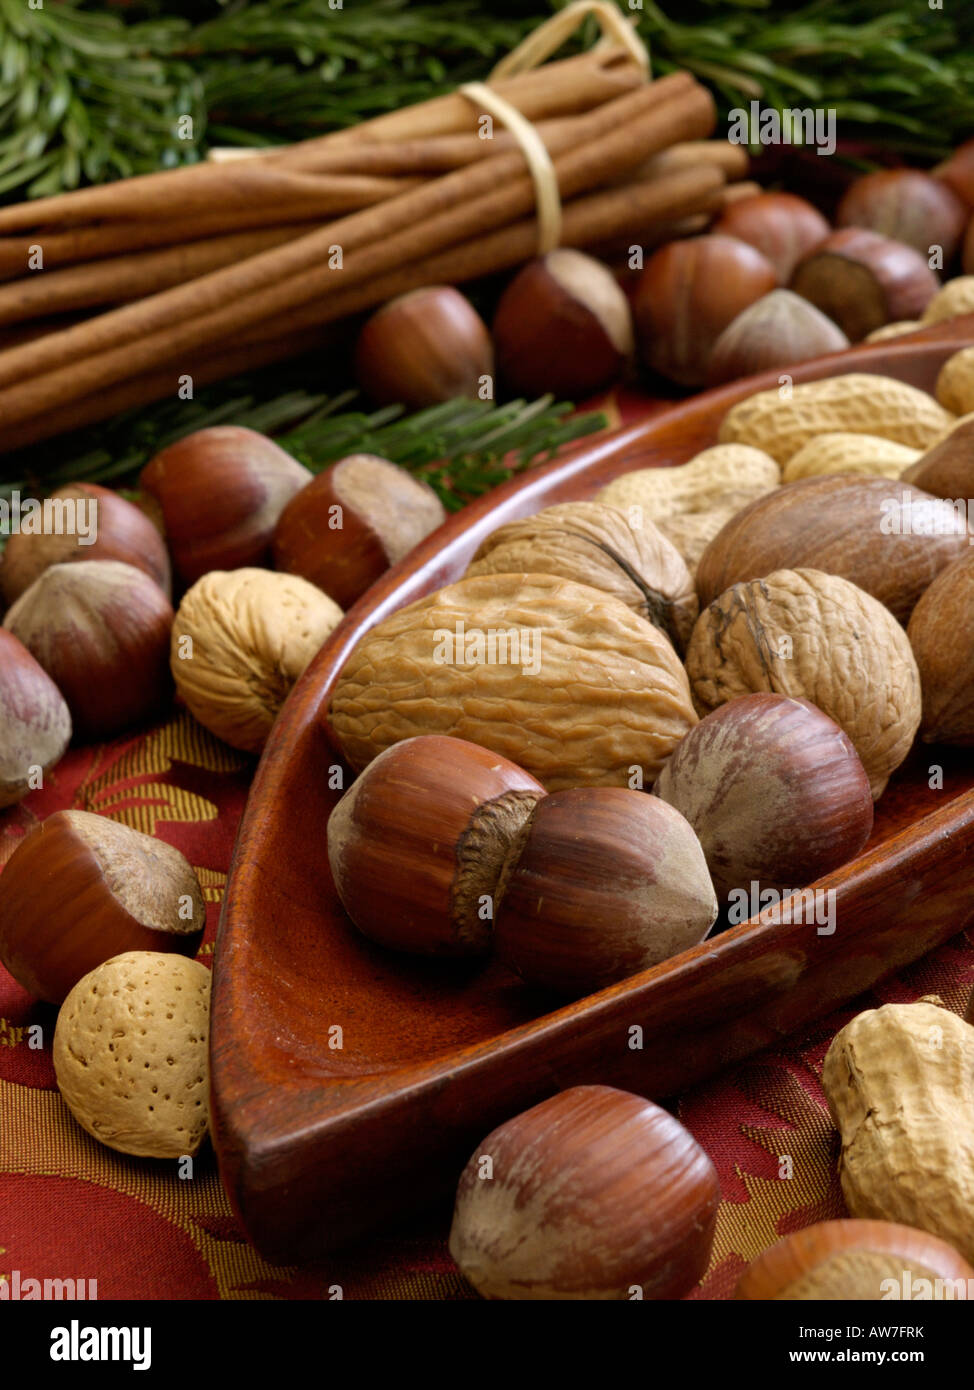 Filbert (Corylus maxima), English walnut (Juglans regia) and peanut (Arachis hypogaea) Stock Photo